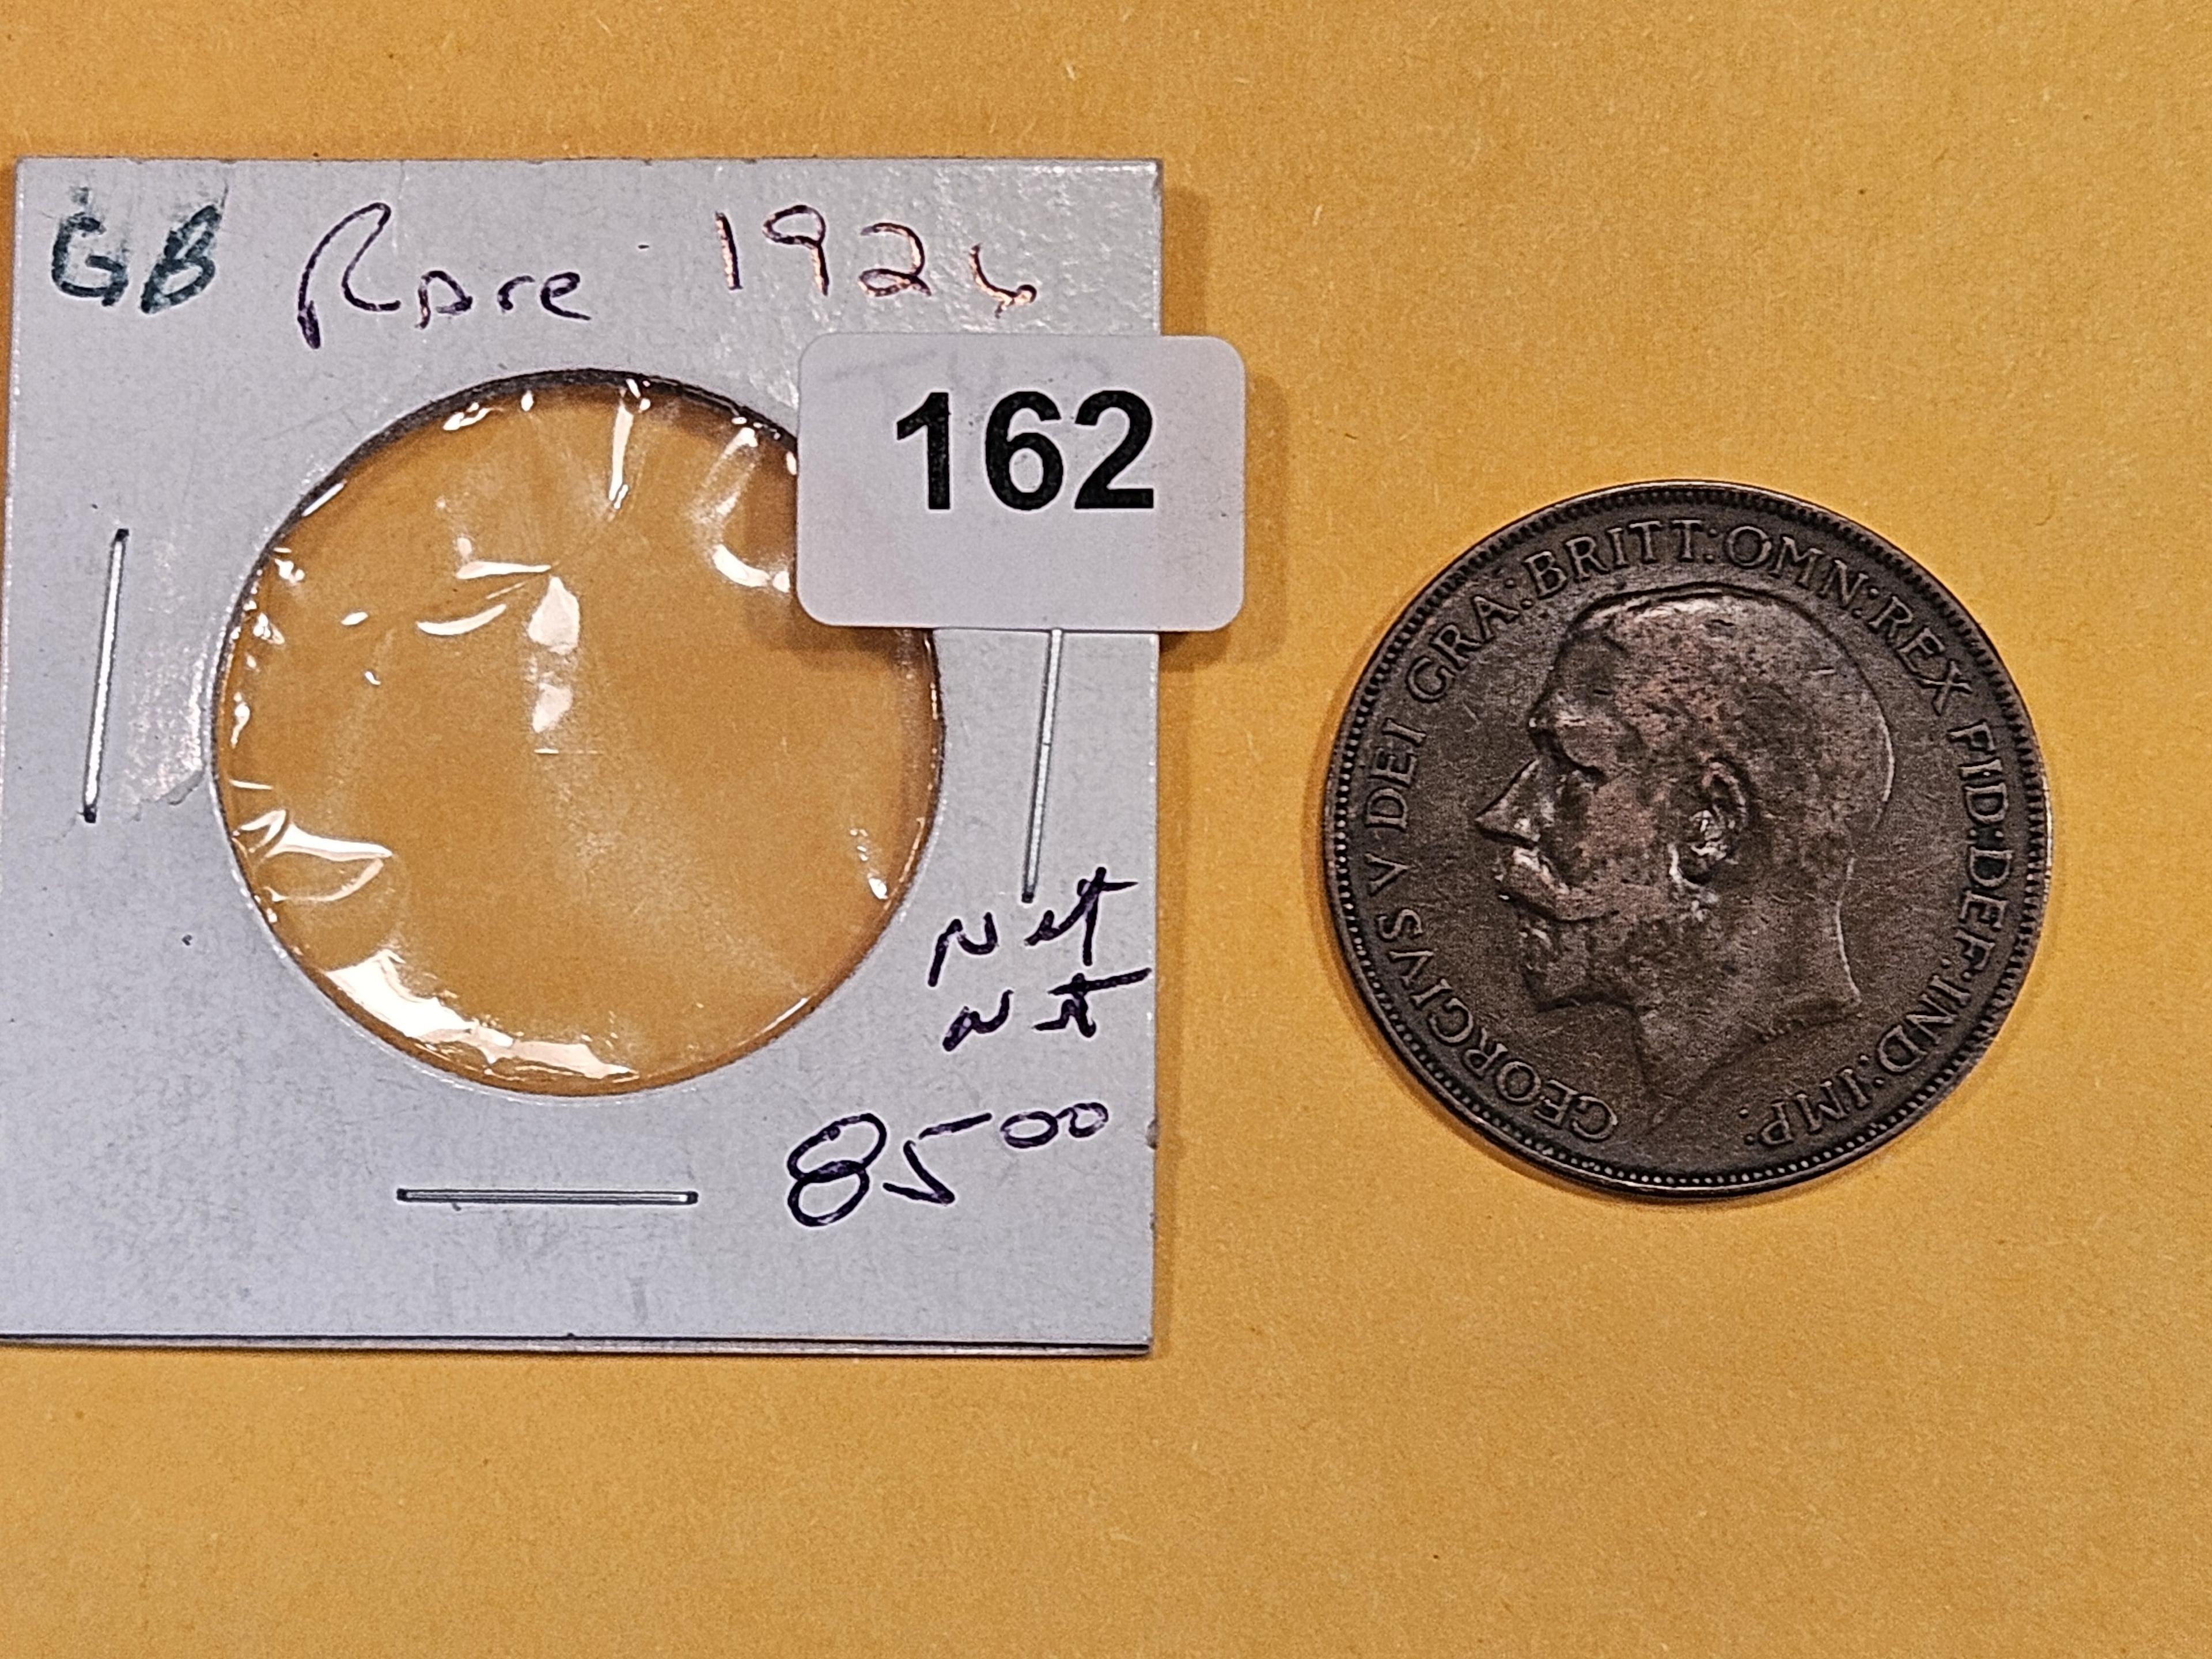 * Key 1926 Great Britain penny